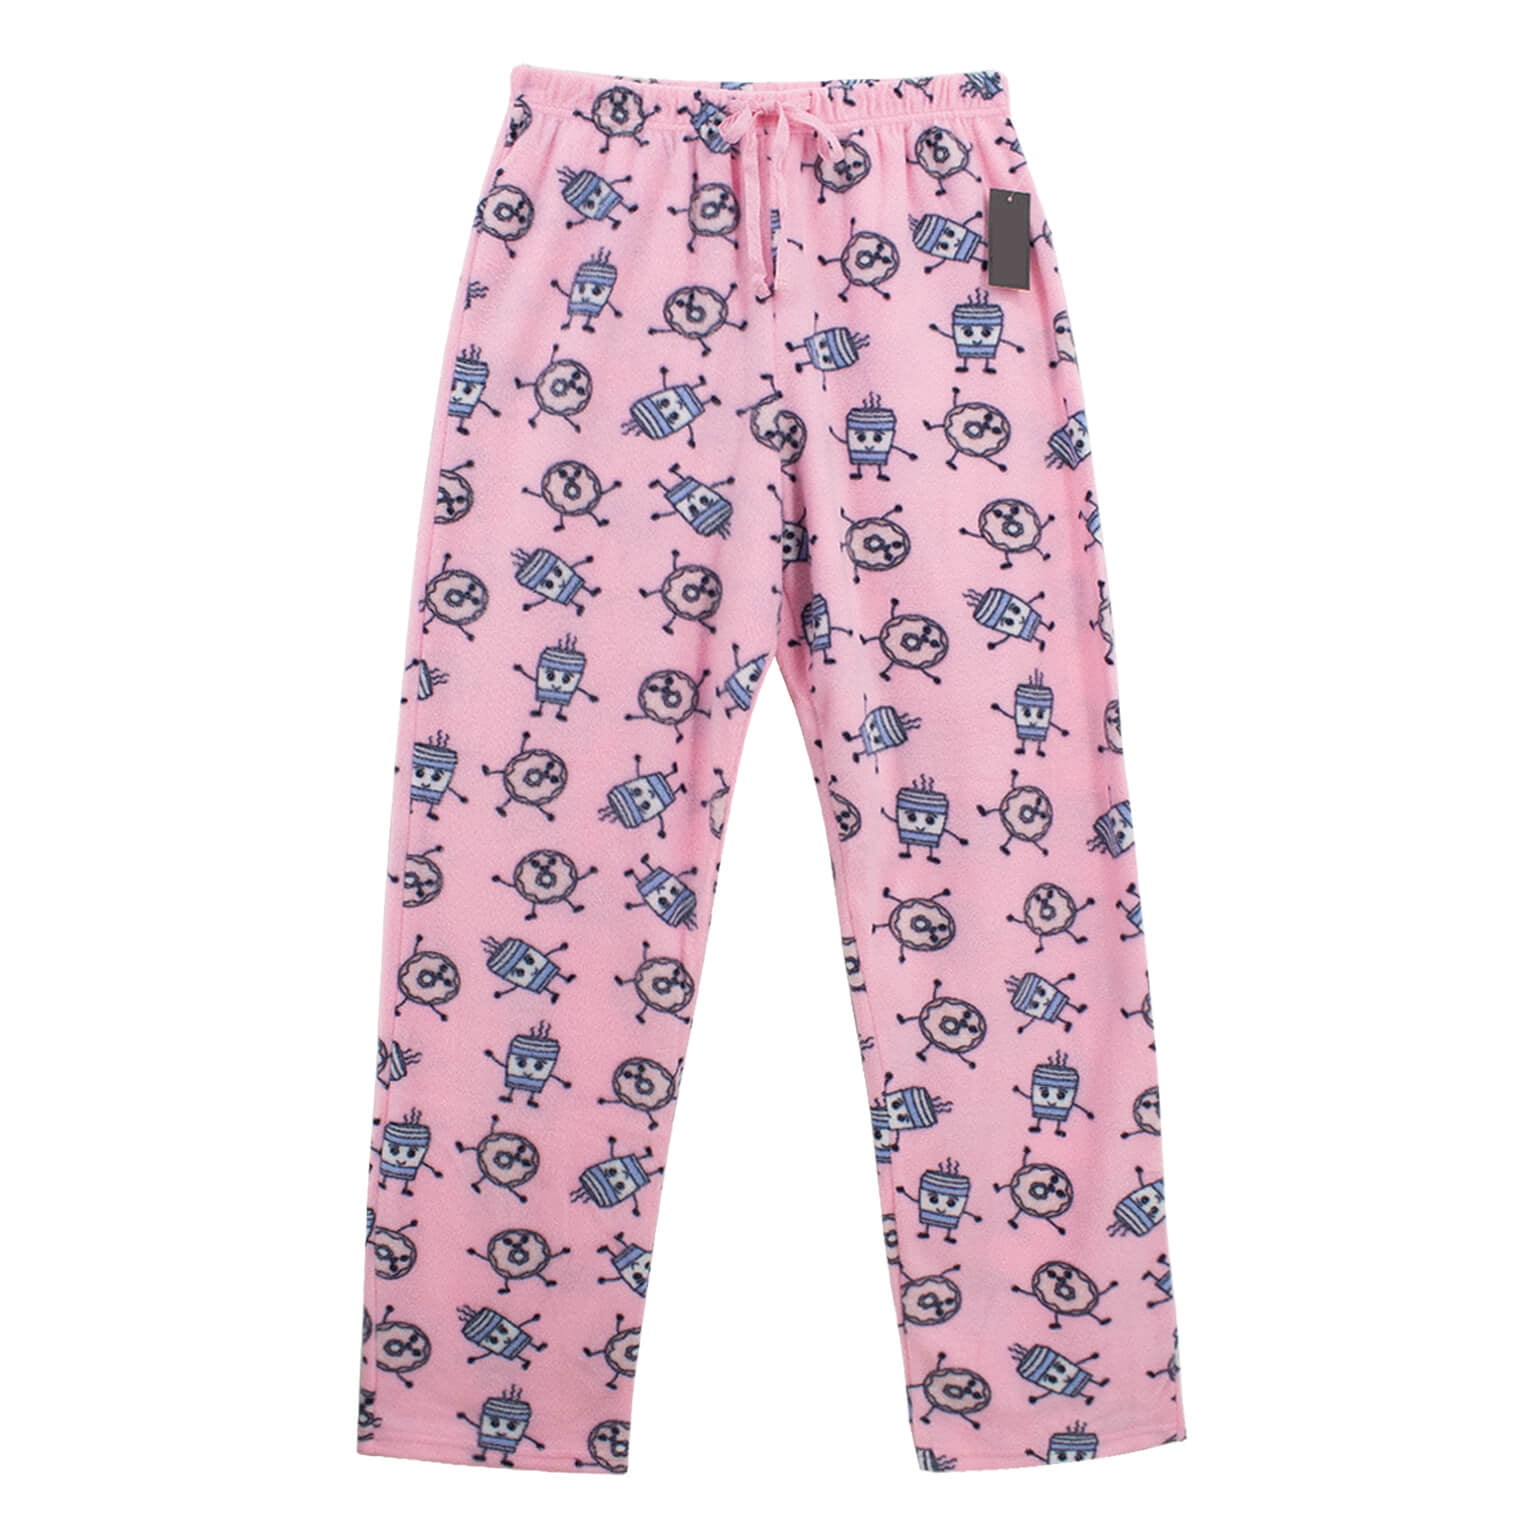 Womens Ladies Plush Fleece PJ Pajama Pants 3122PNK, Pink Donuts, Size M